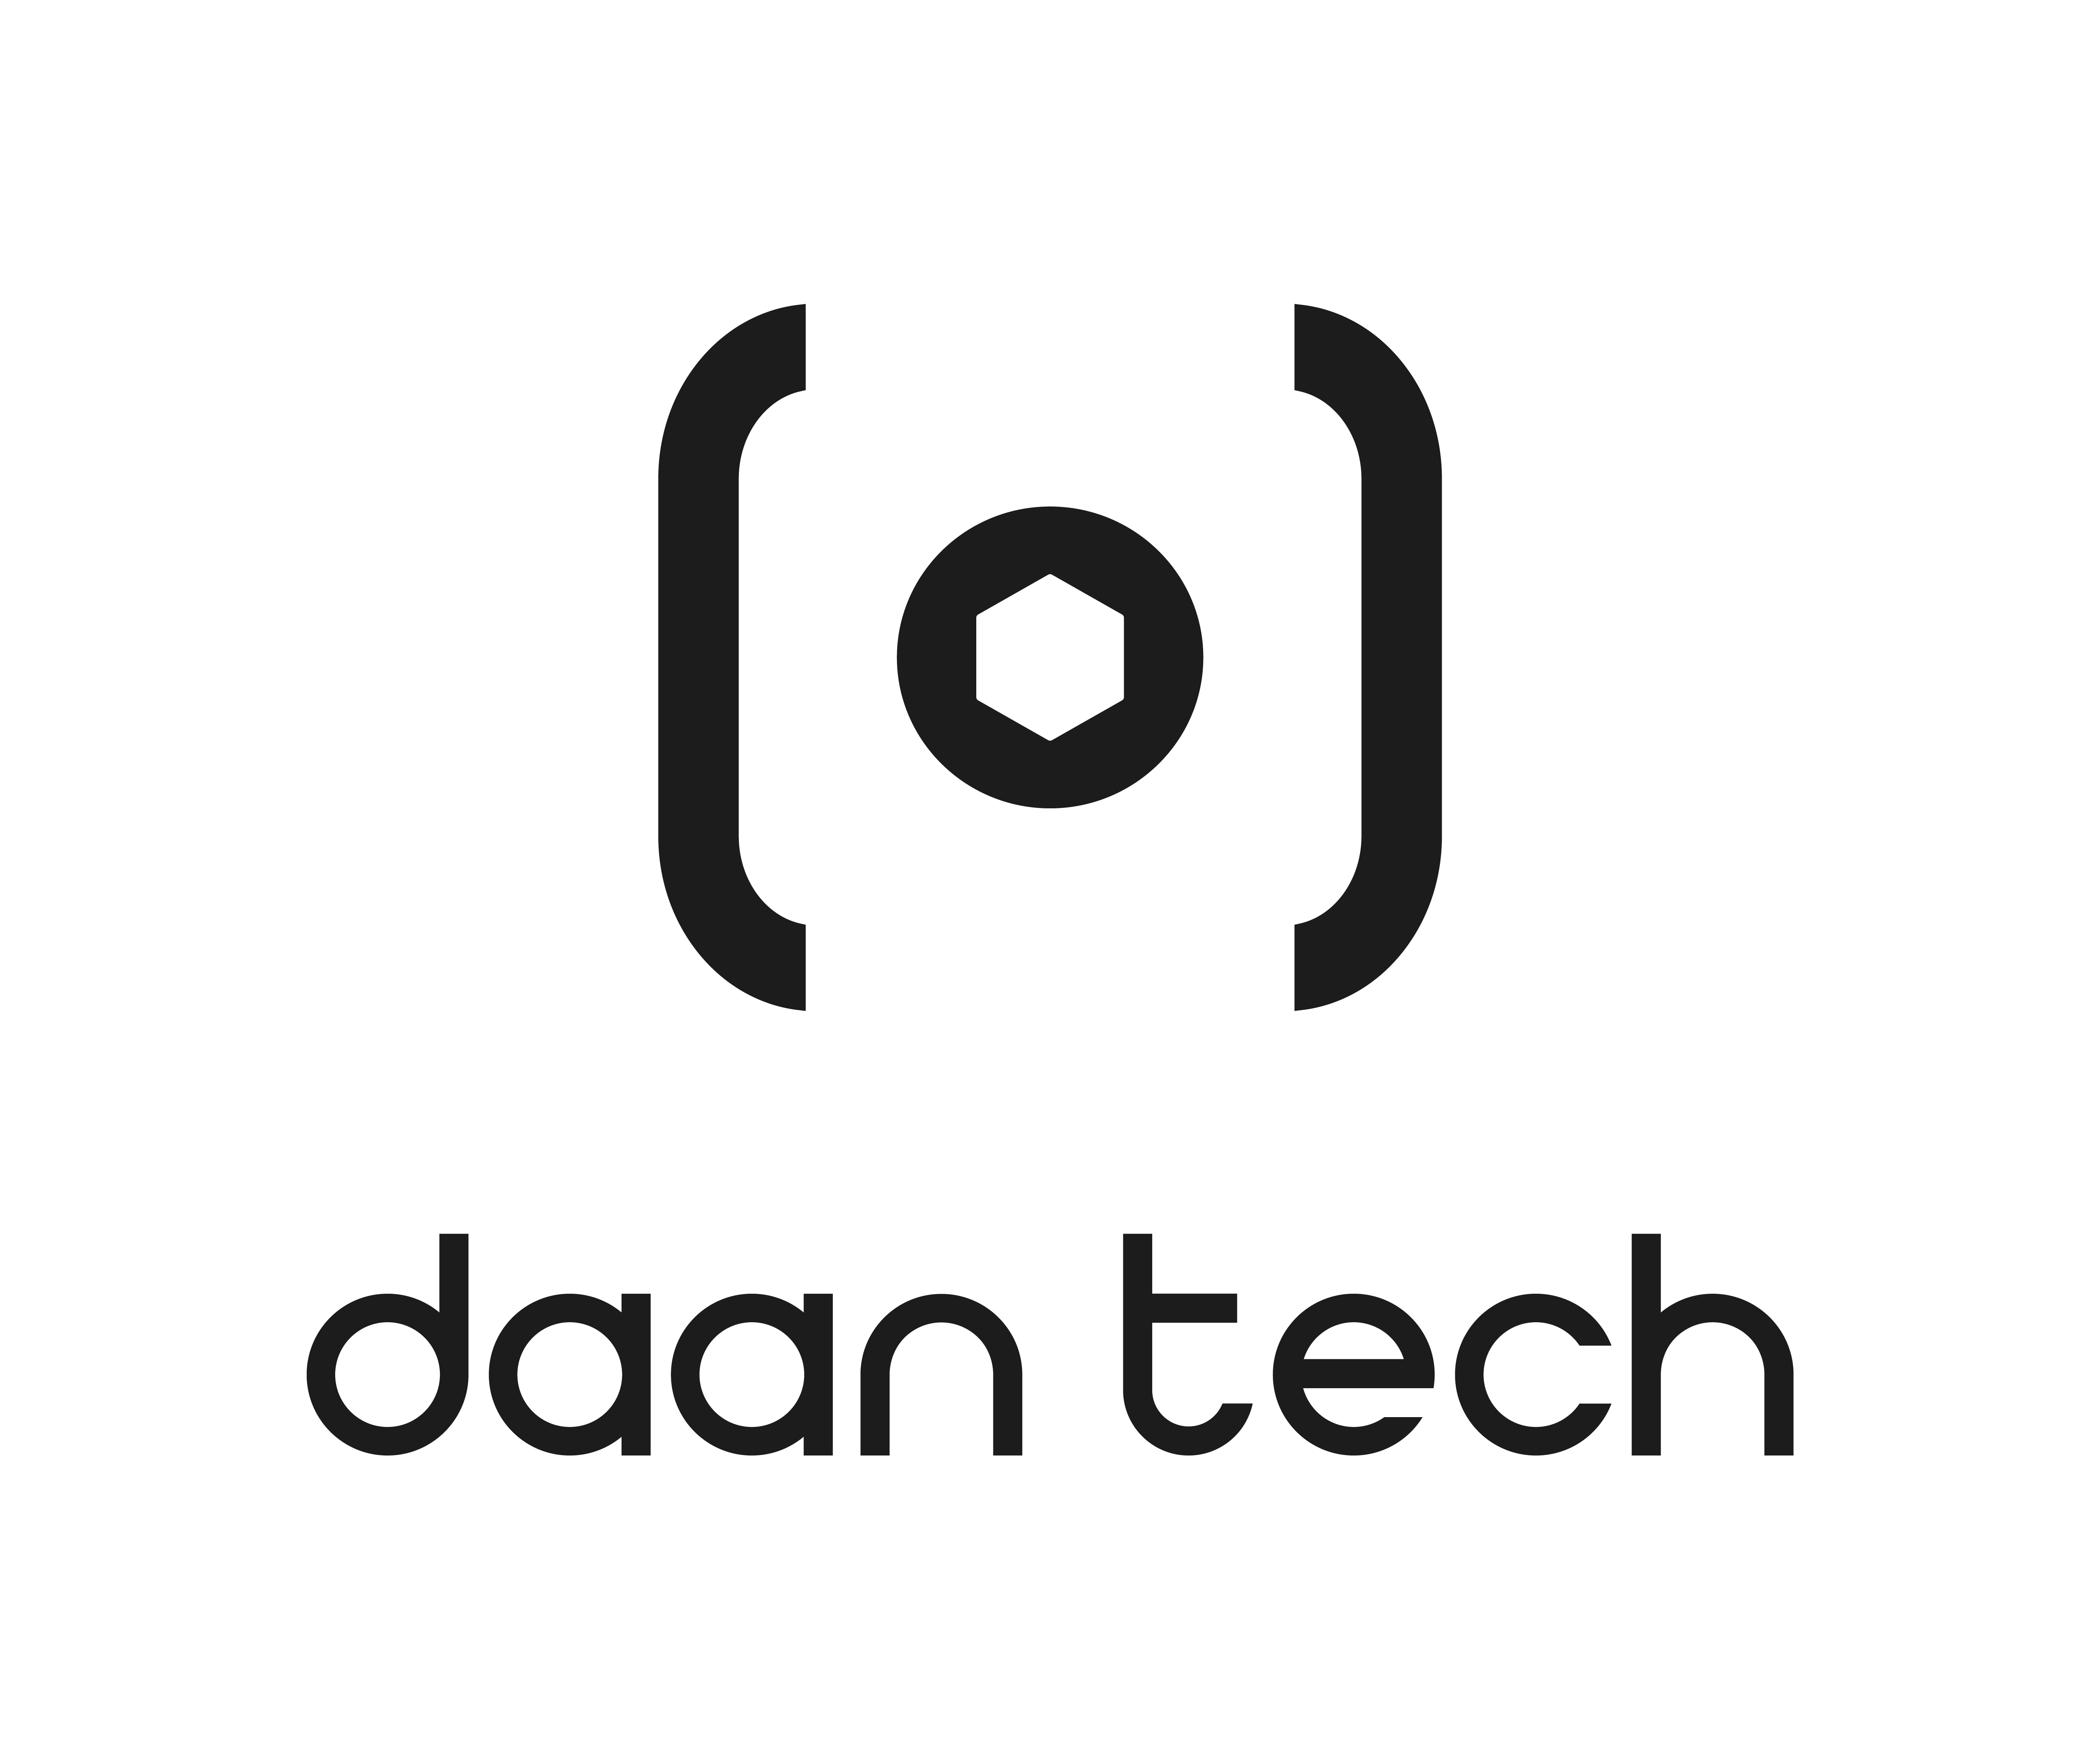 Daan Technologies